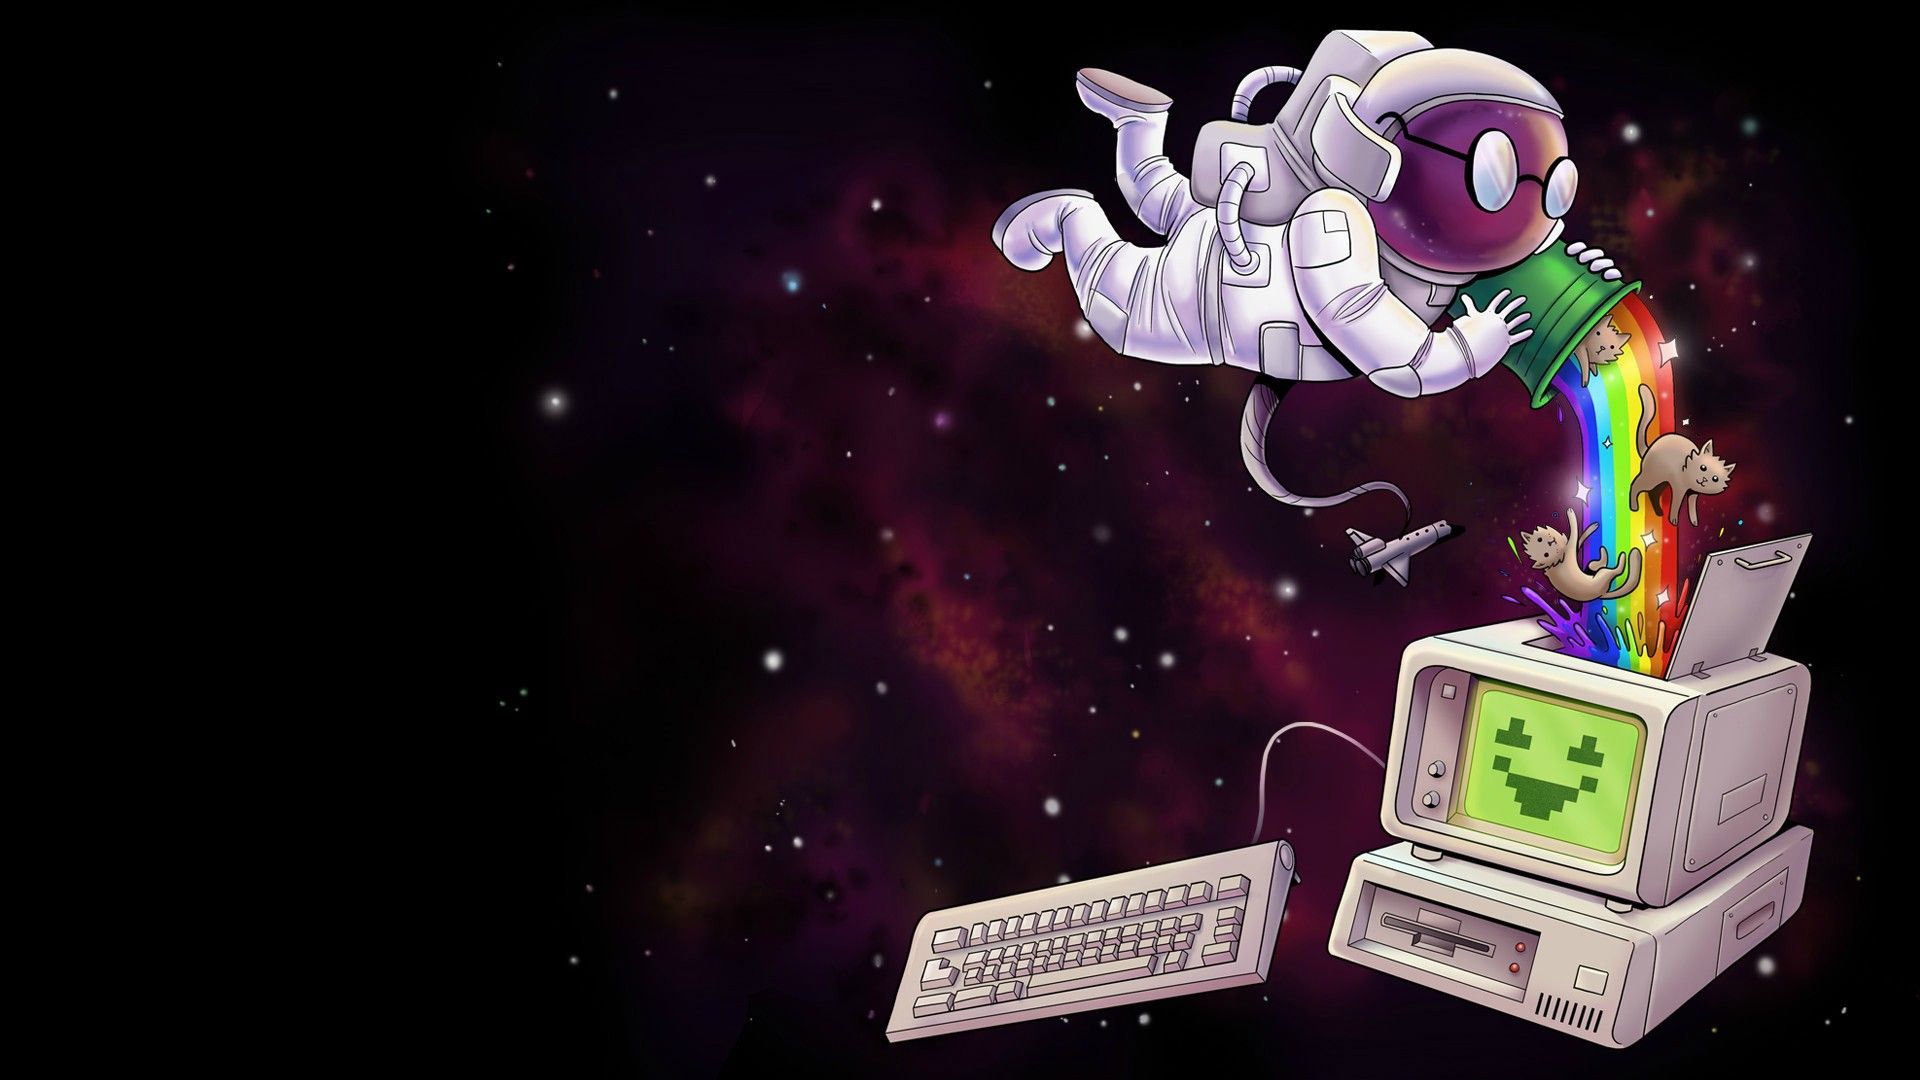 astronaut hd desktop backgrounds